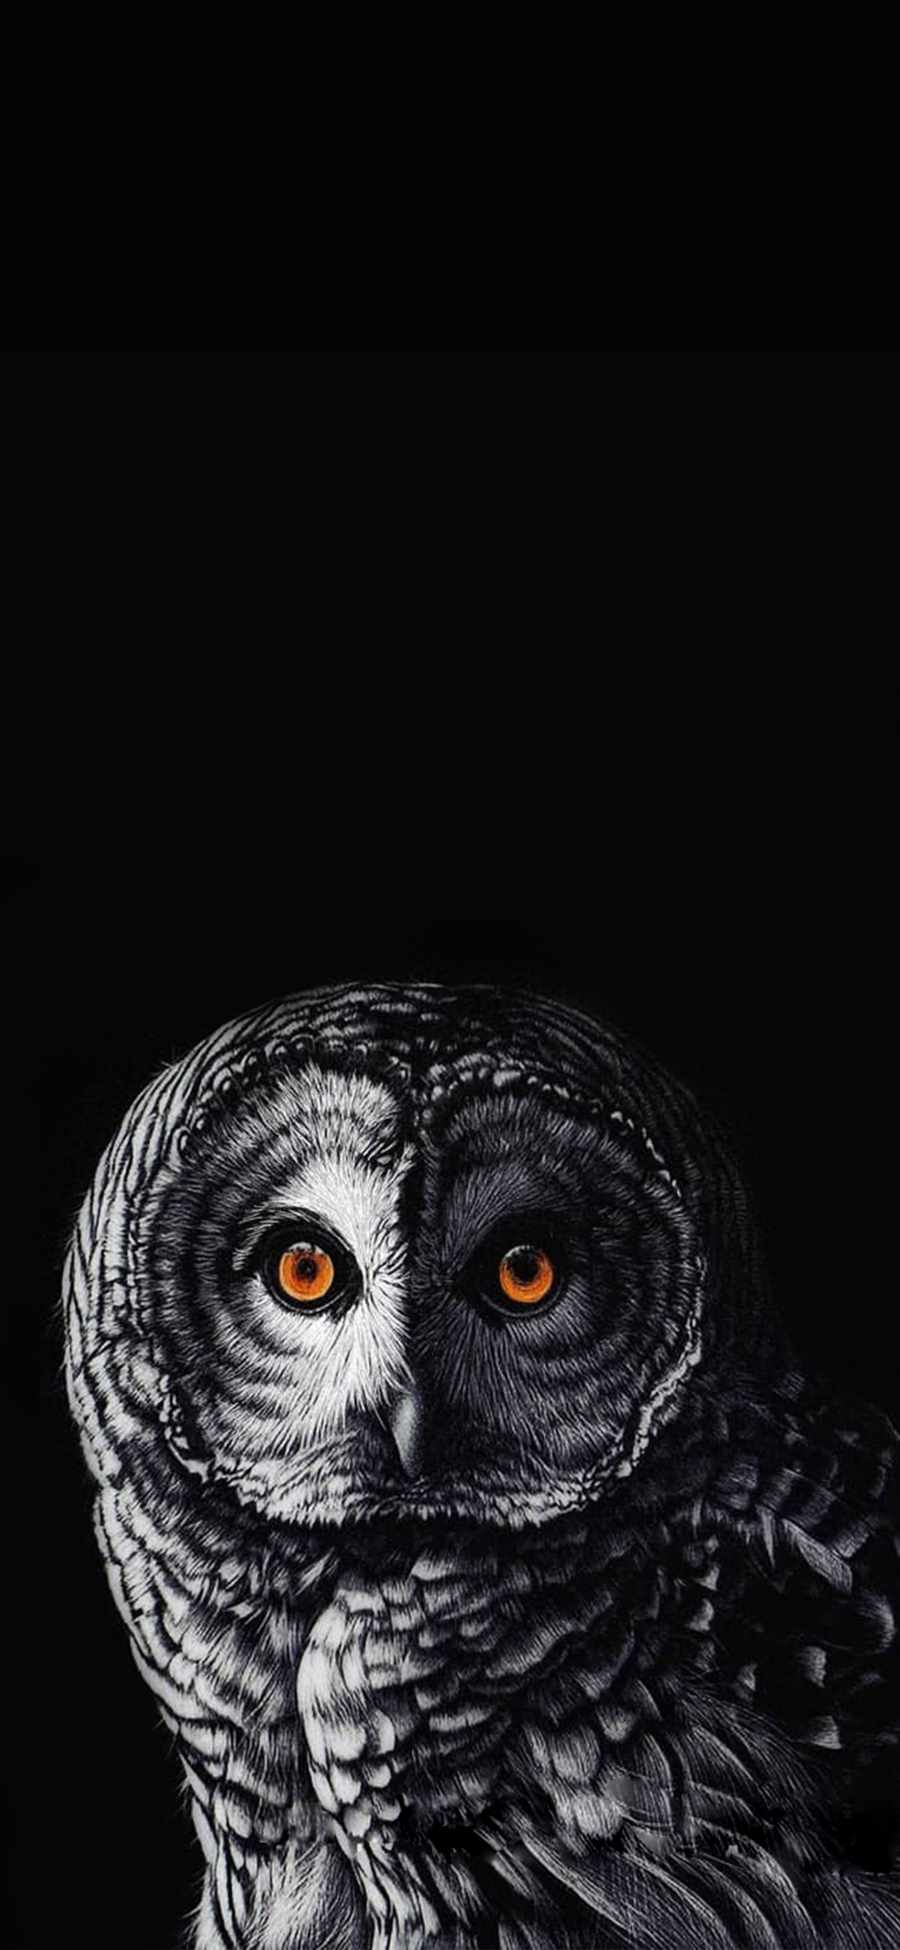 The Owl 4K iPhone Wallpaper